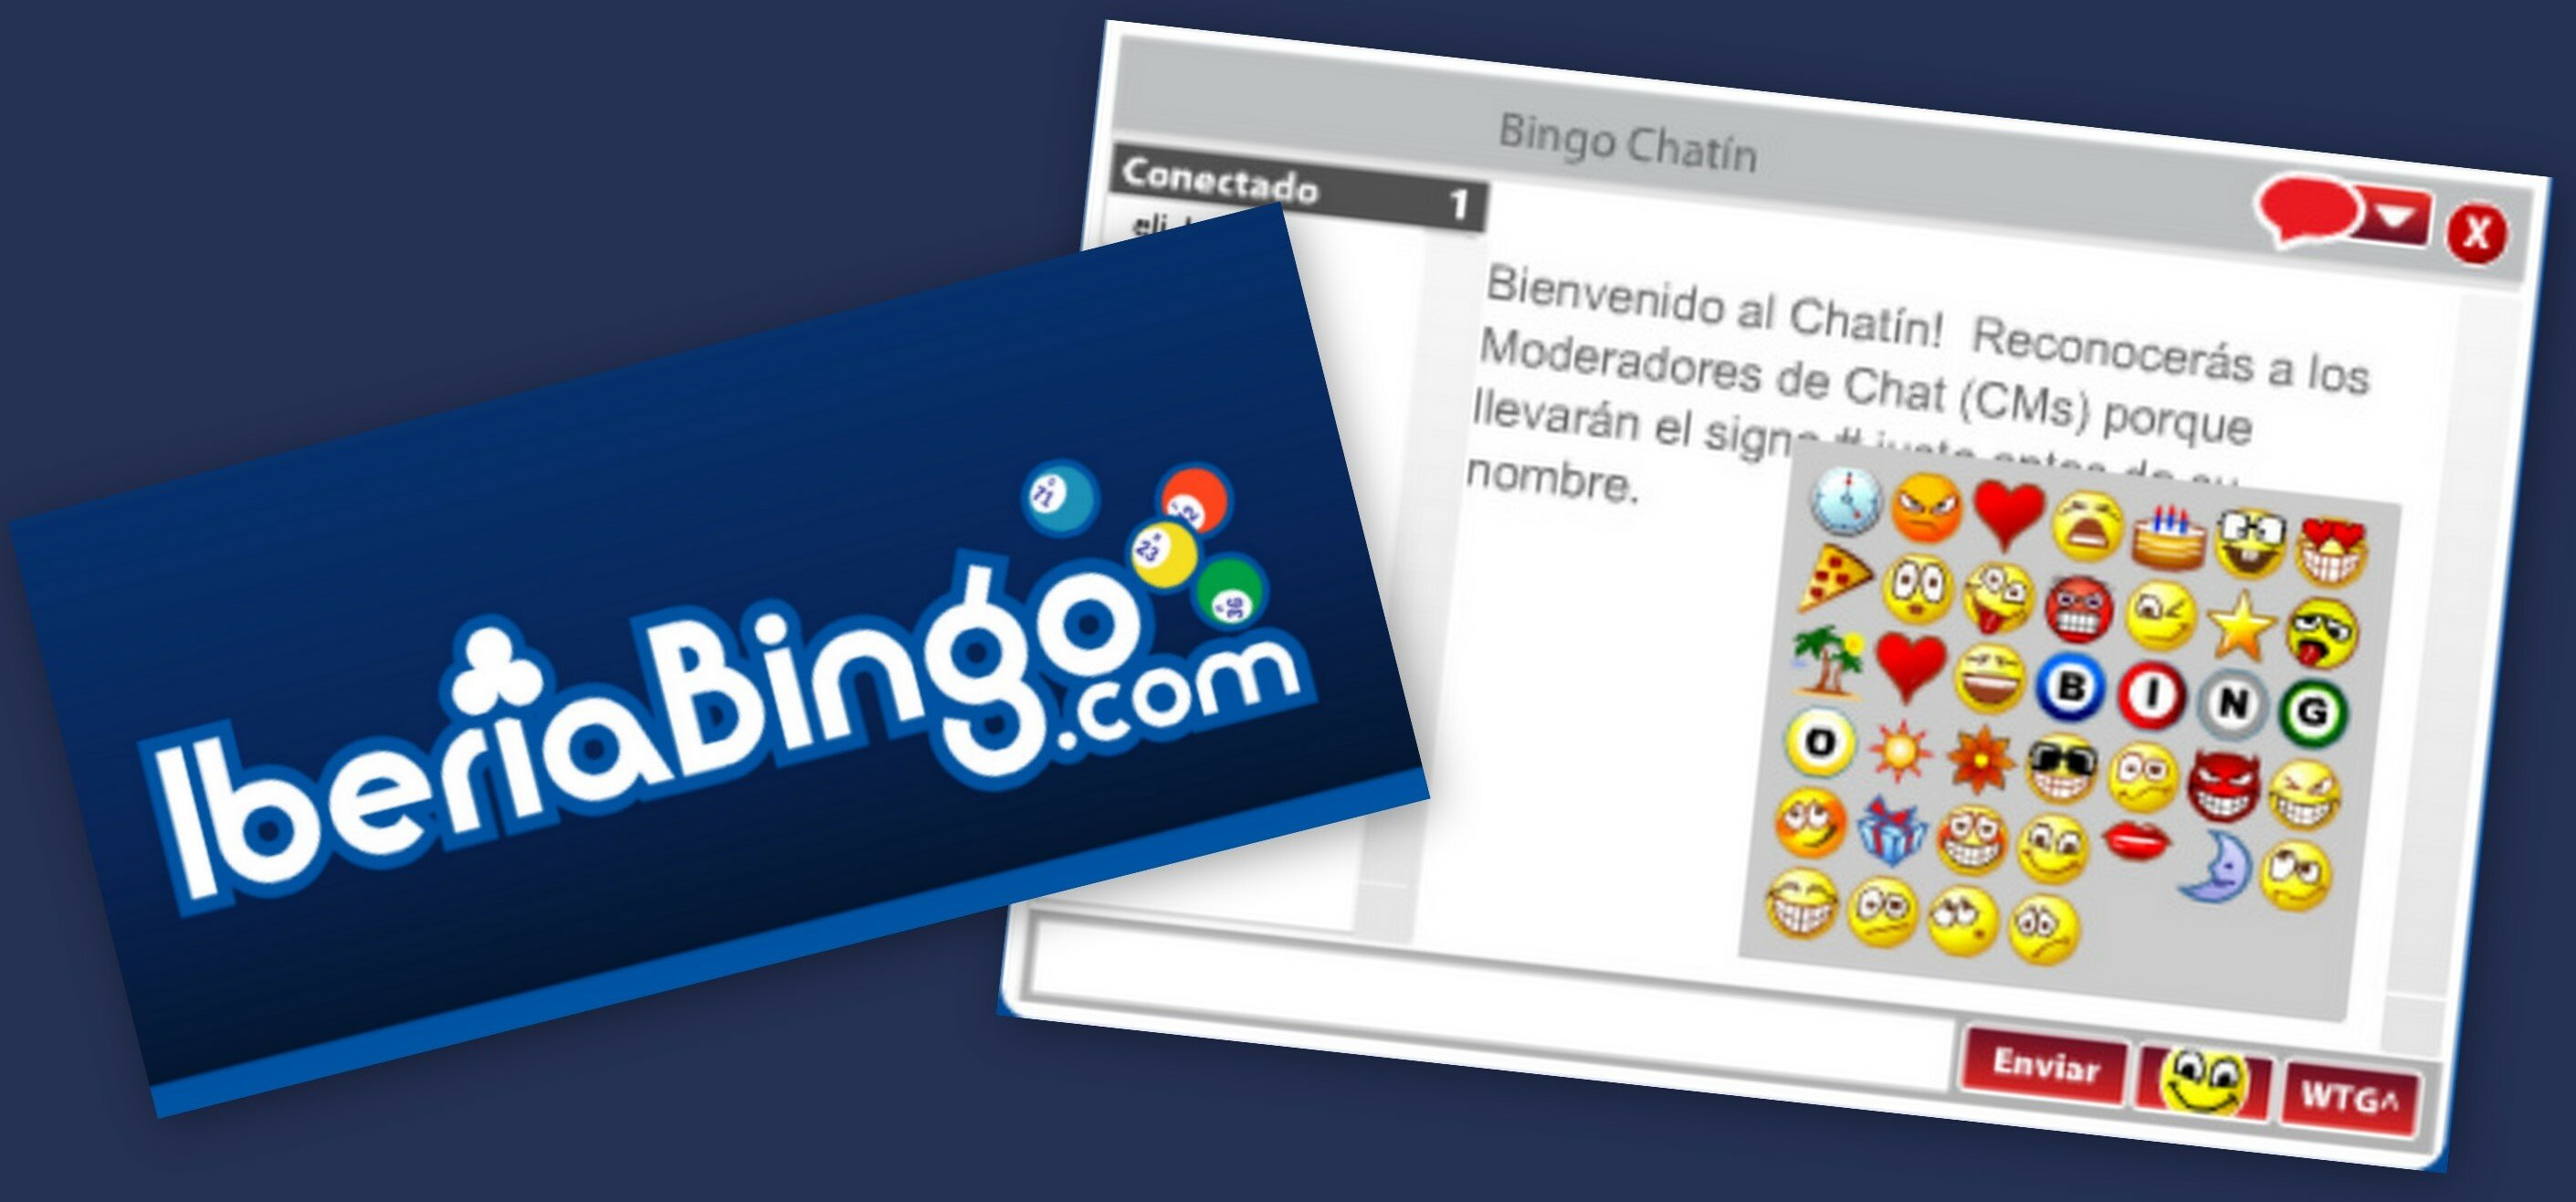 Chat Iberia Bingo1 Panorama del uso del chat en IberiaBingo